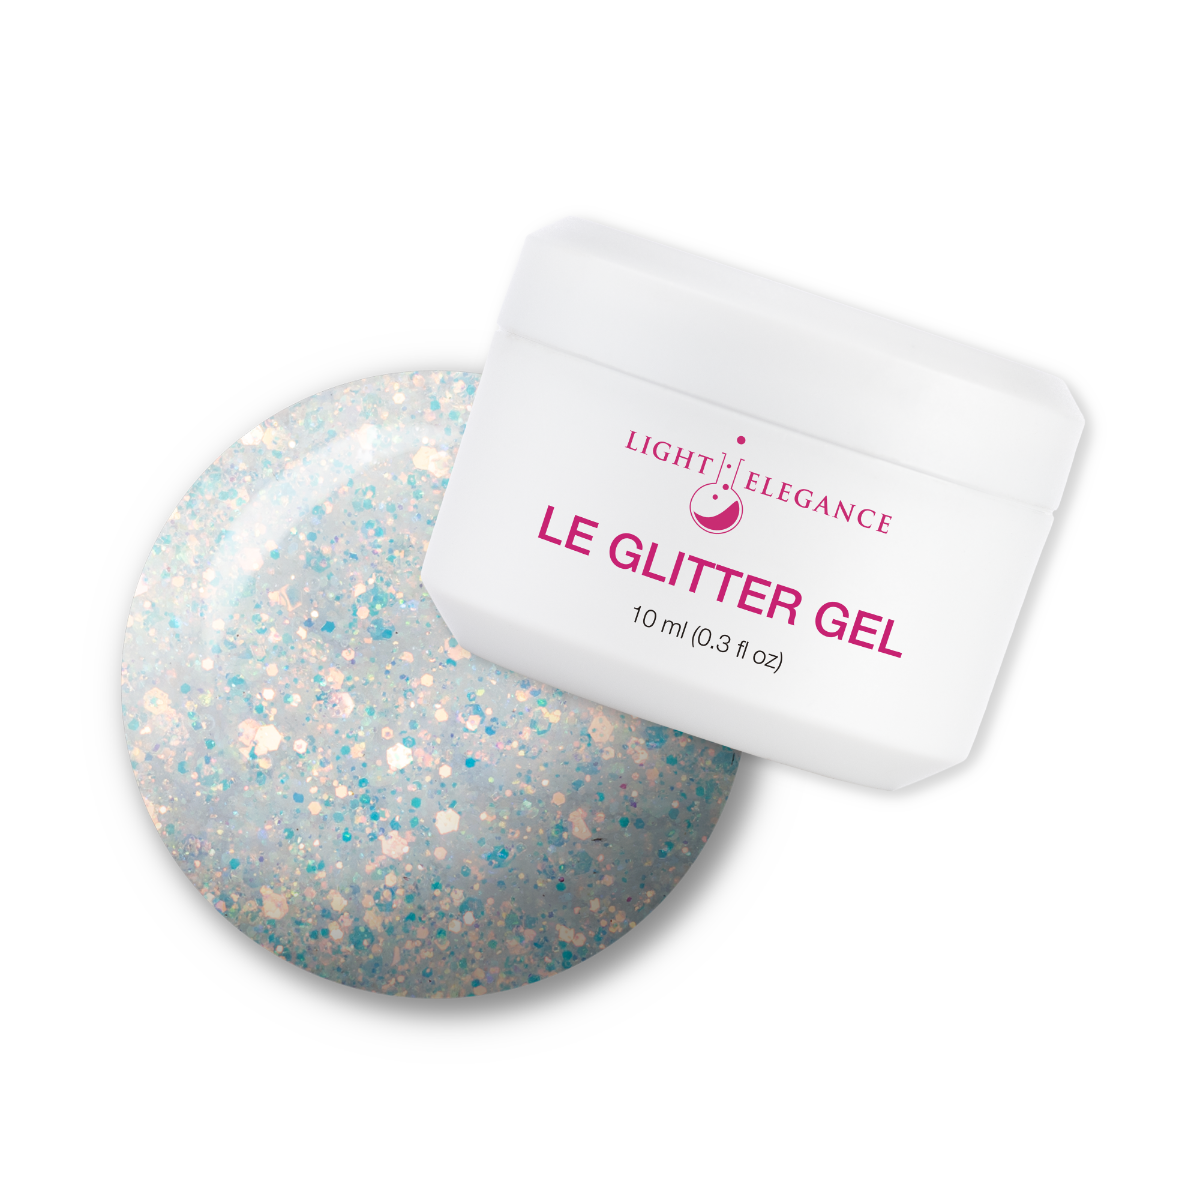 Light Elegance Glitter Gel - Swing by Sweden :: New Packaging - Creata Beauty - Professional Beauty Products